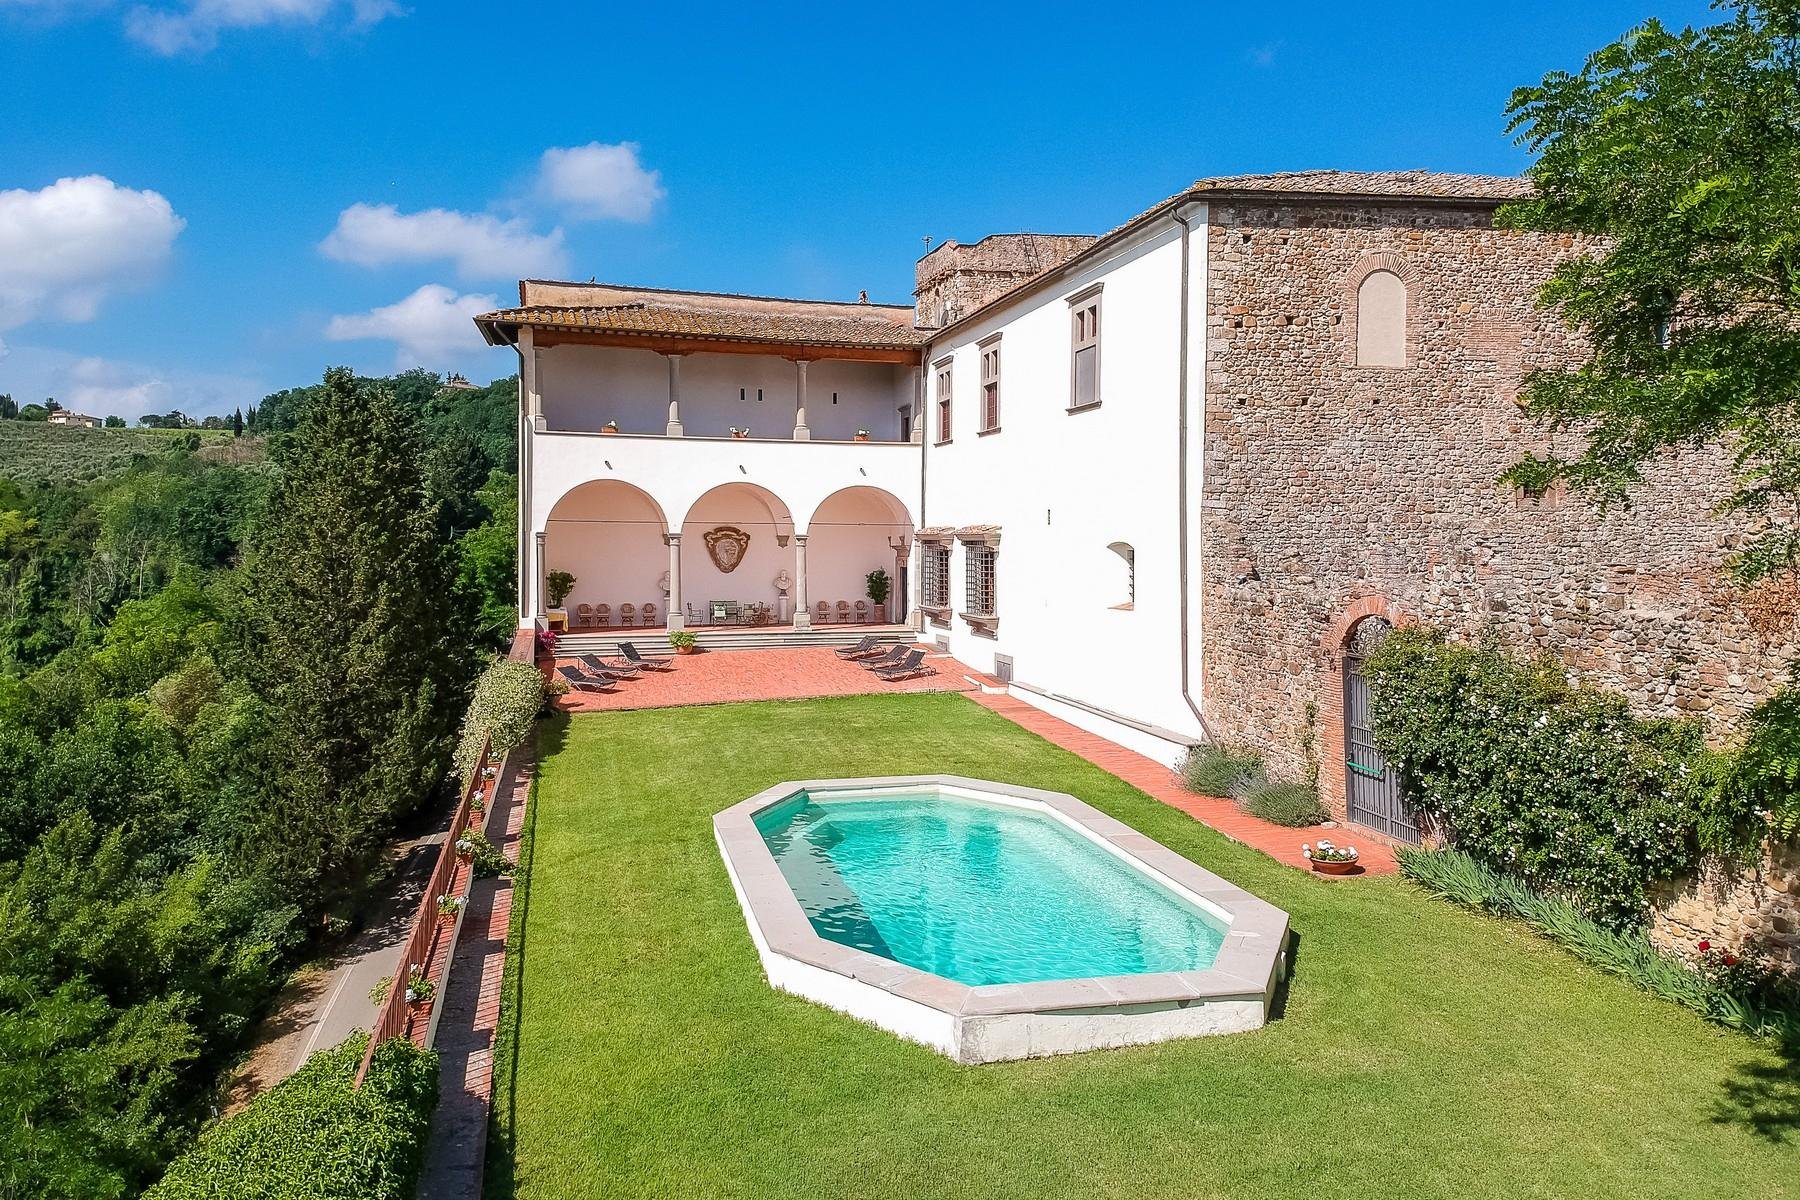 Francis York Medieval Castle Turned Renaissance Villa in Tuscany, Italy  00031.jpg